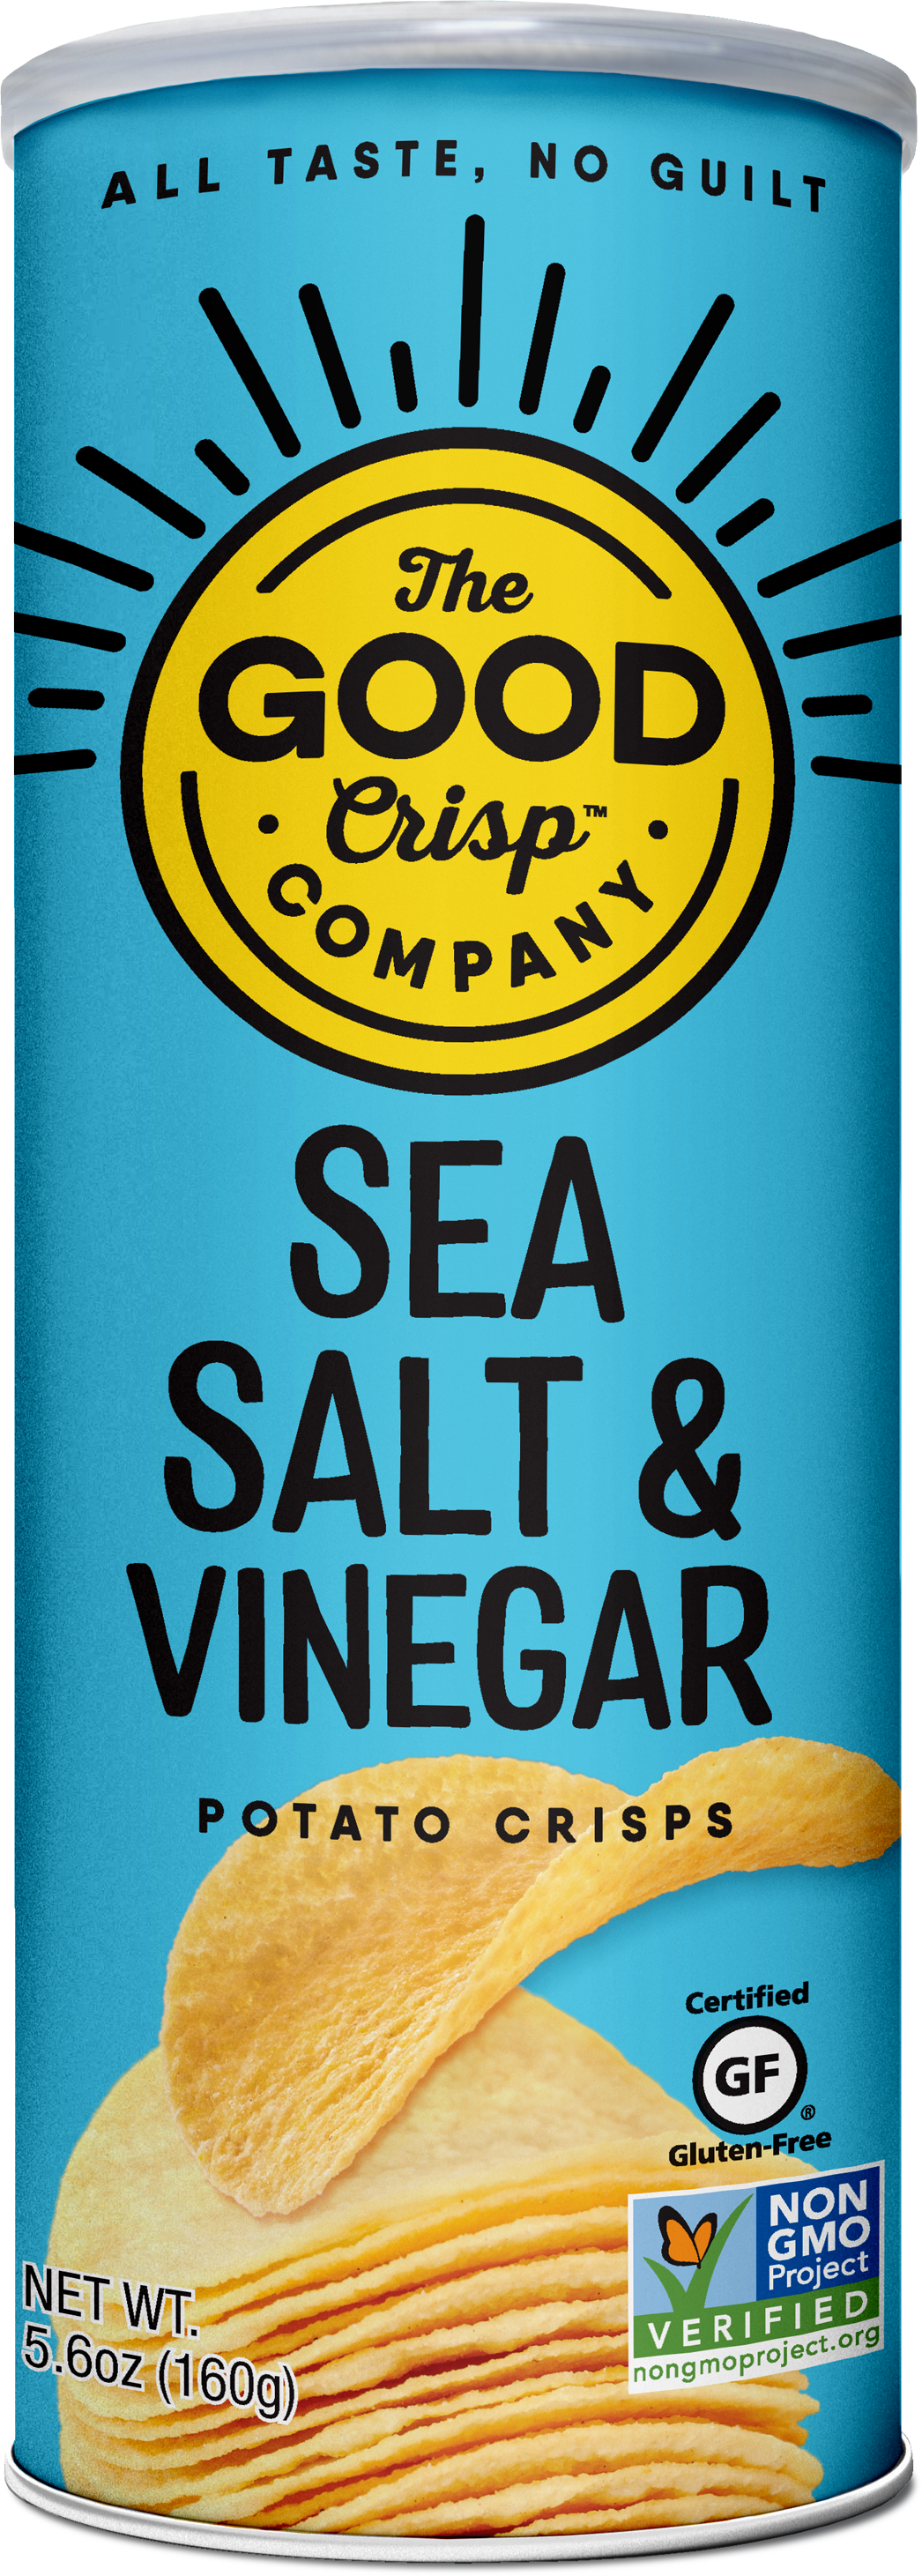 The Good Crisp Company - Sea Salt & Vinegar Chips - 5.6oz